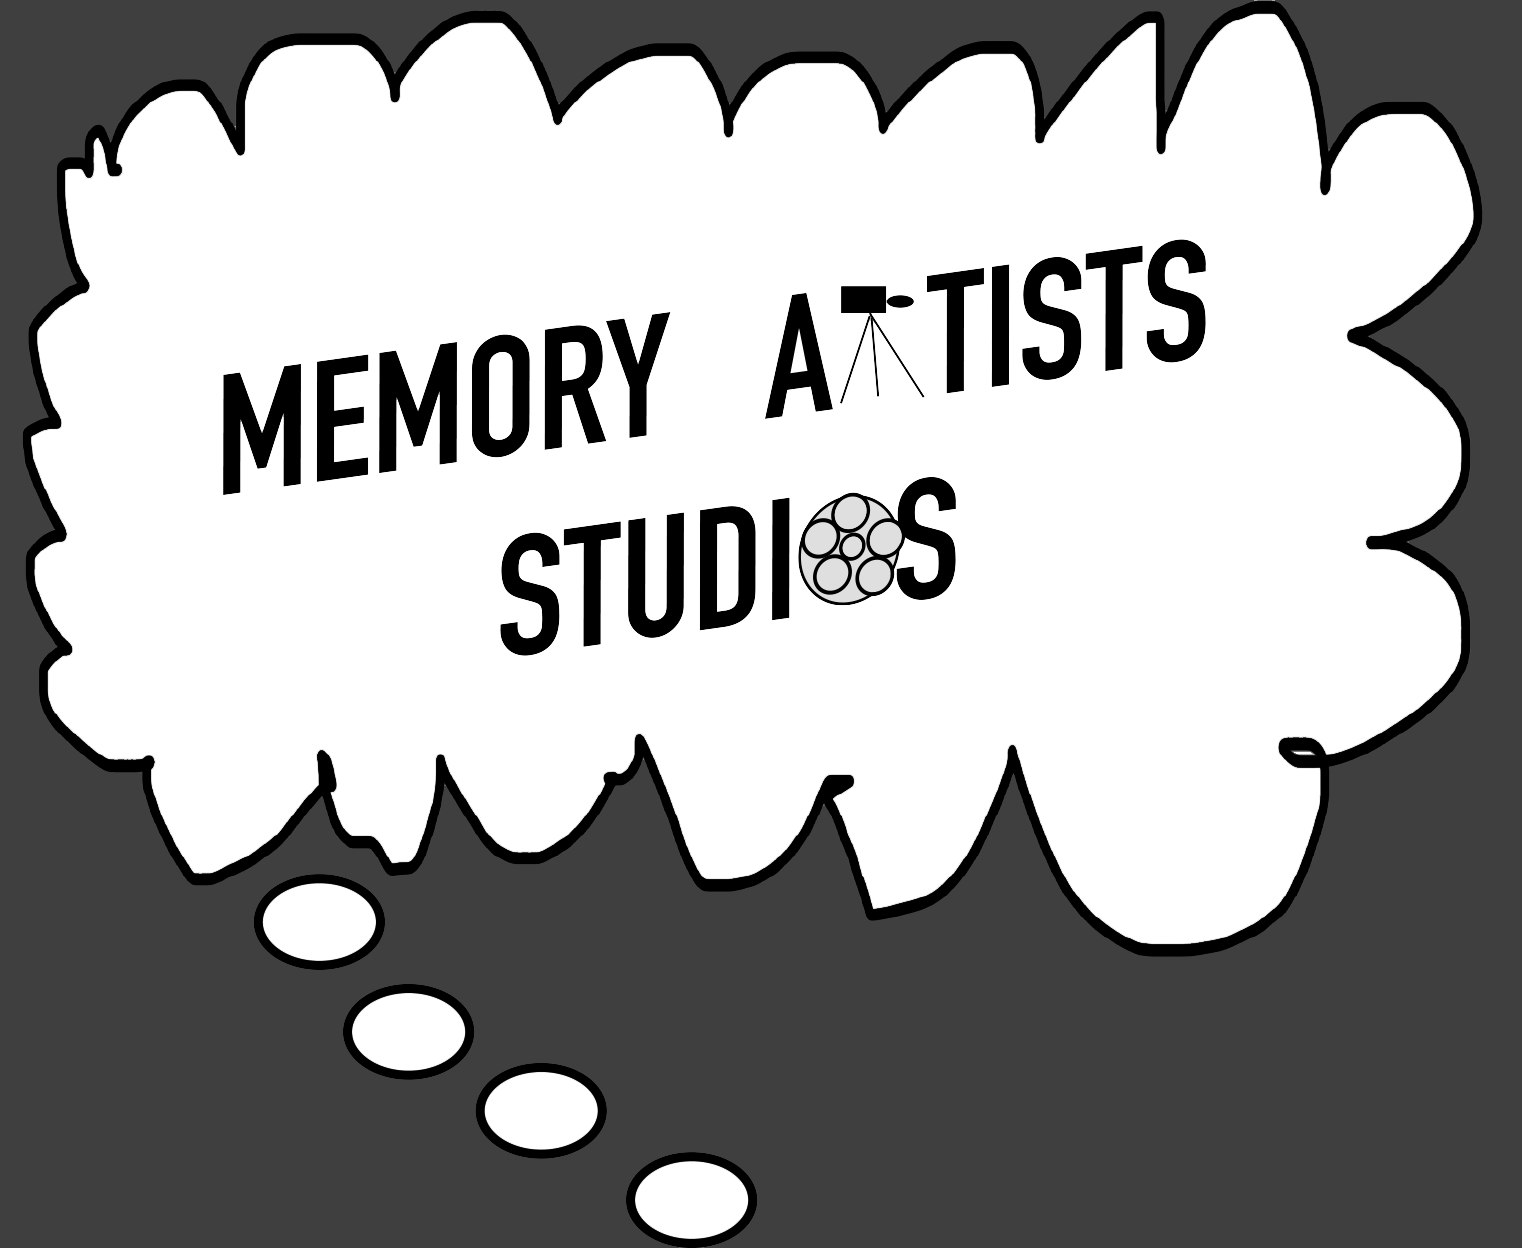 Memory Artists Studios